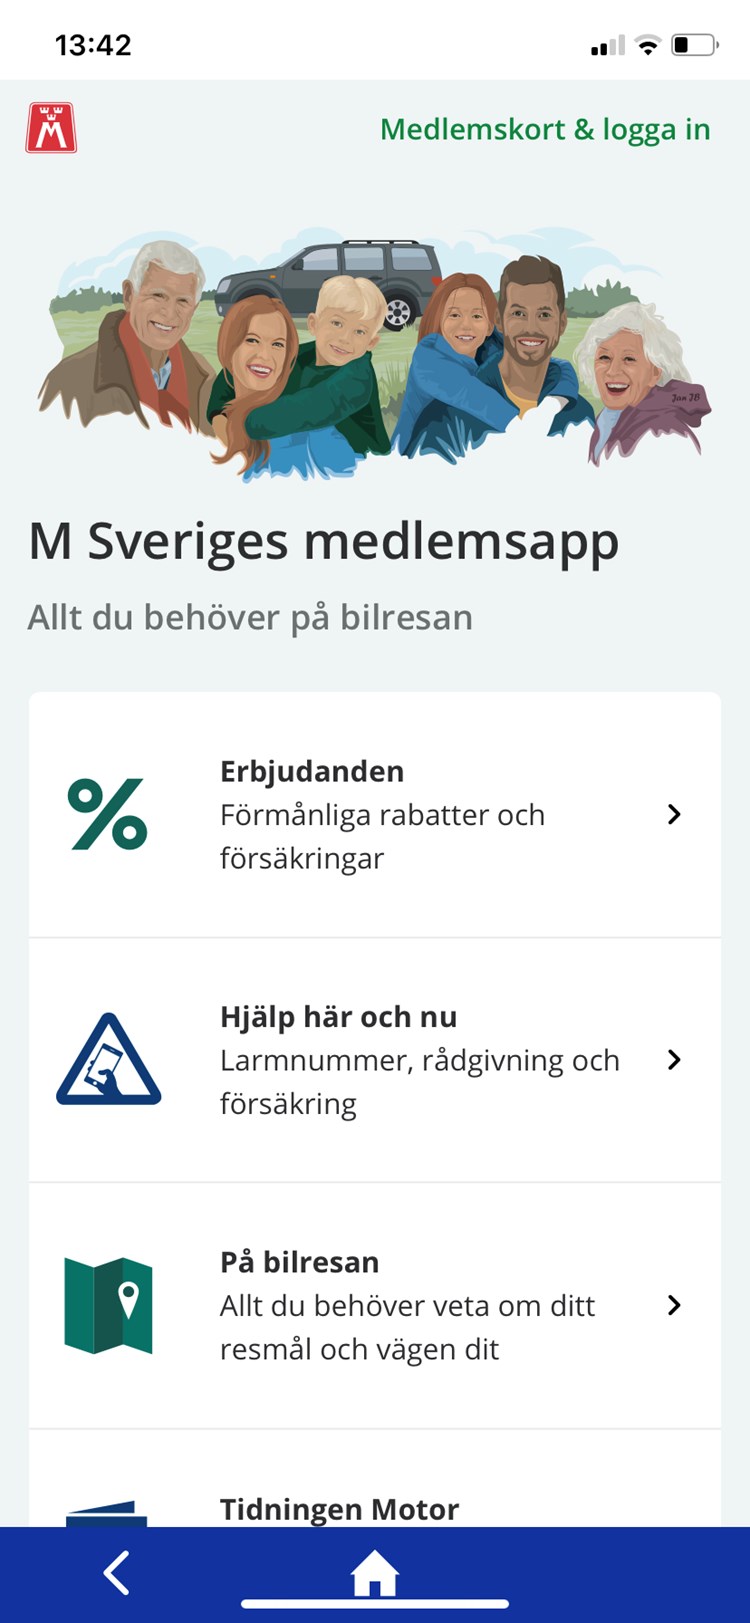 M Sveriges app- hjälp på resan